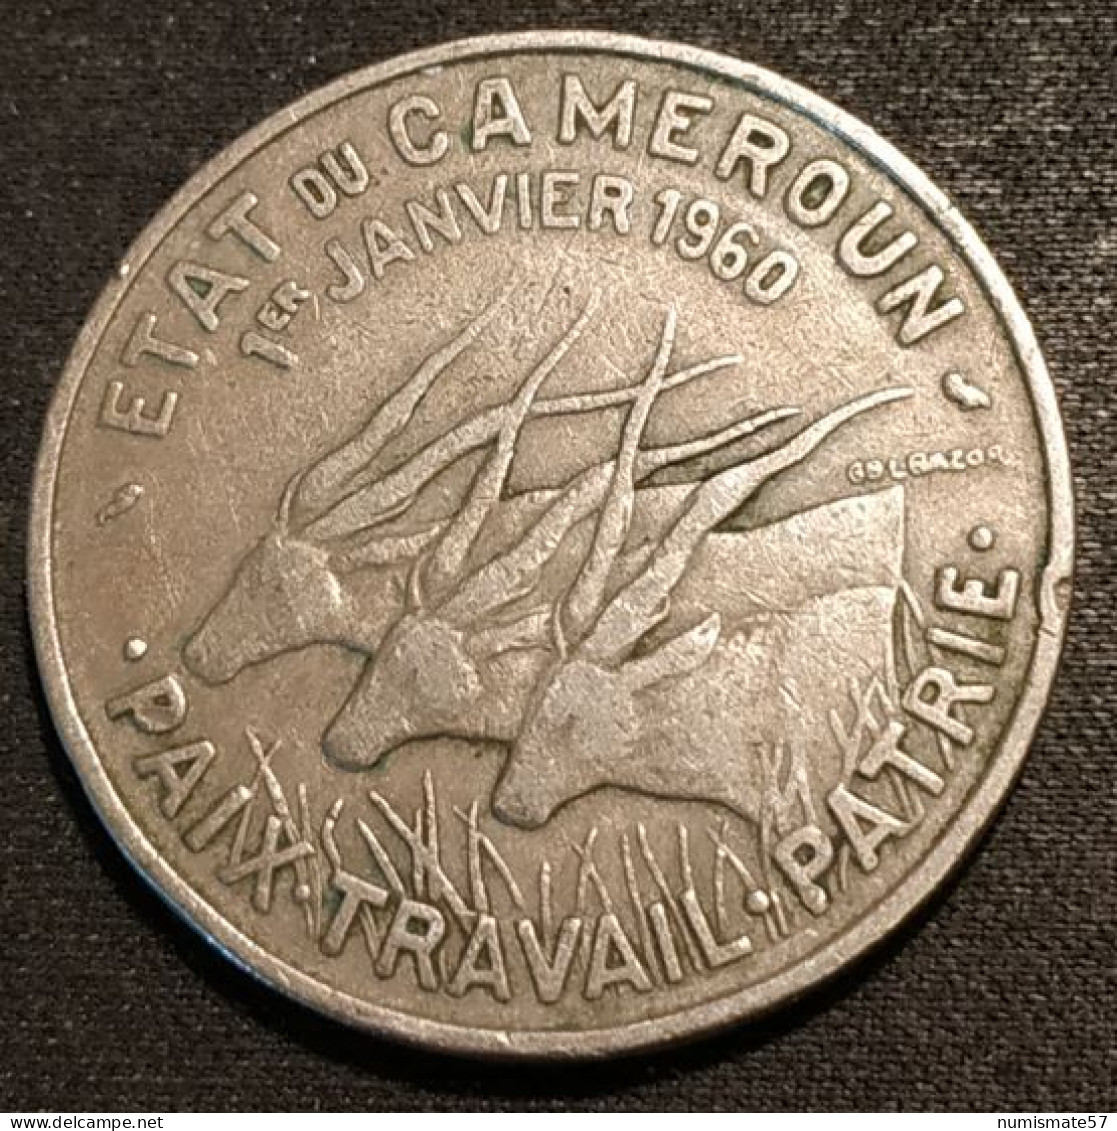 CAMEROUN - 50 FRANCS 1960 - KM 13 - ( 1er JANVIER 1960 - PAIX TRAVAIL PATRIE ) - Kamerun